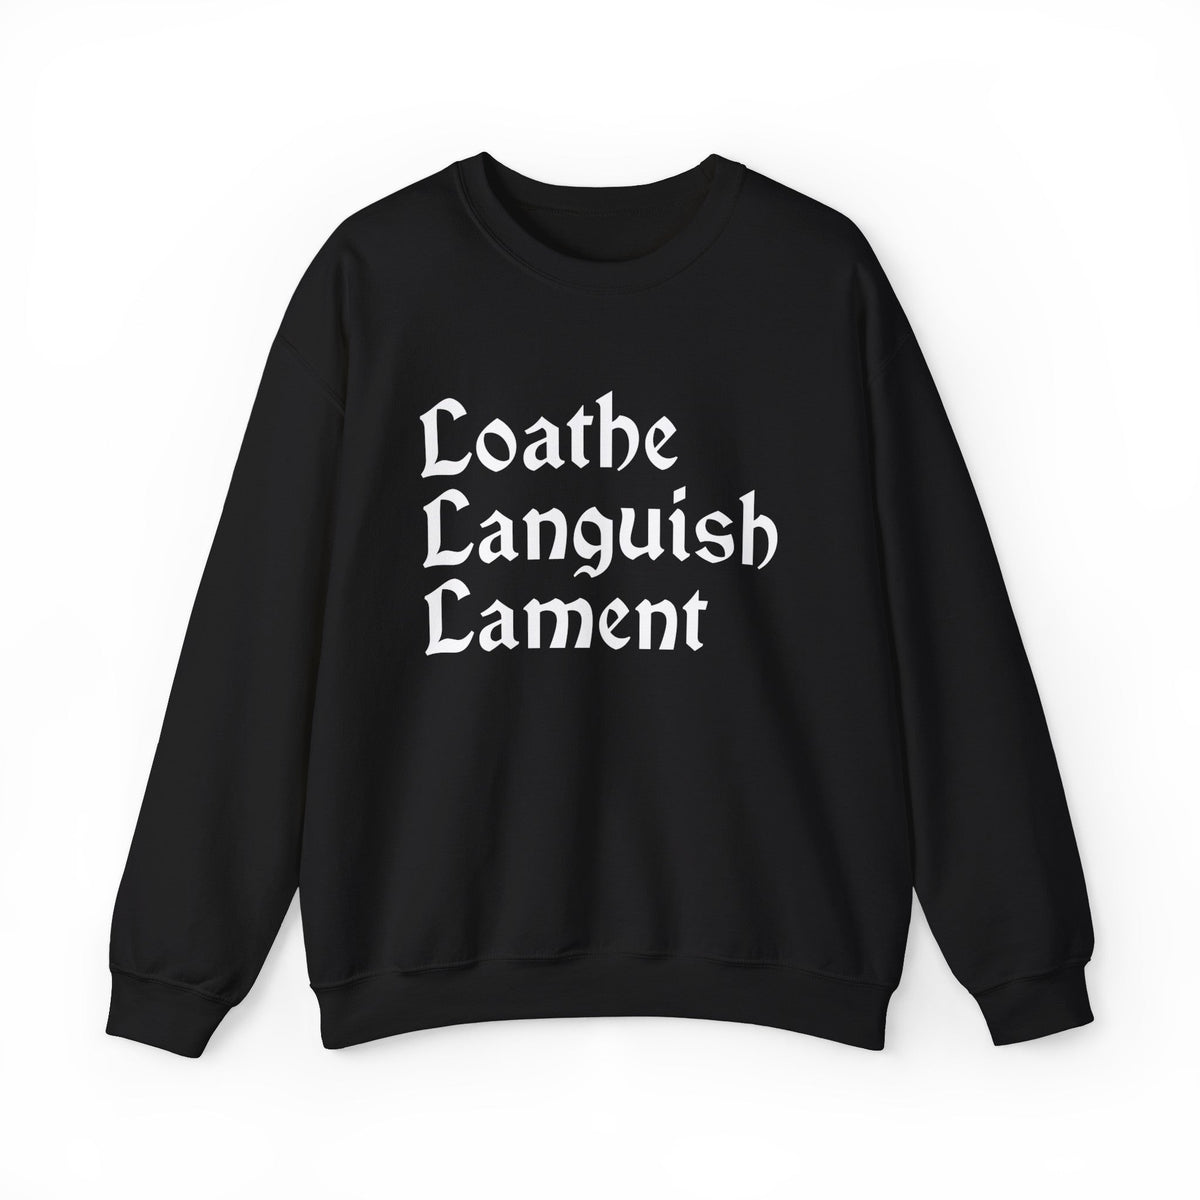 Loathe Languish Lament Gothic Crew Neck Sweatshirt - Goth Cloth Co.Sweatshirt28469302899229723731